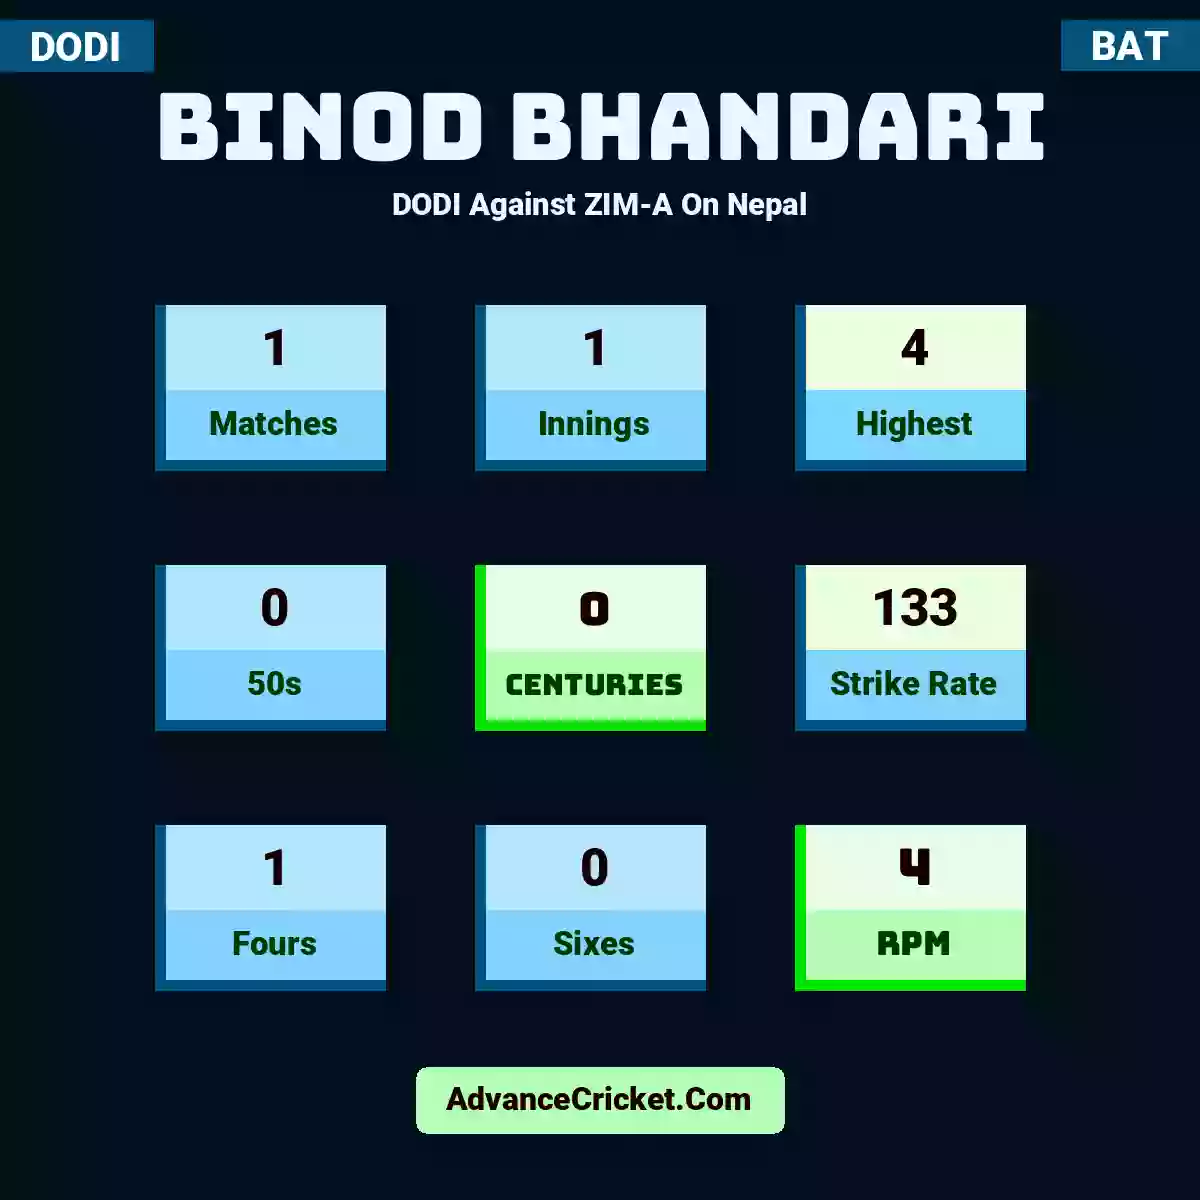 Binod Bhandari DODI  Against ZIM-A On Nepal, Binod Bhandari played 1 matches, scored 4 runs as highest, 0 half-centuries, and 0 centuries, with a strike rate of 133. B.Bhandari hit 1 fours and 0 sixes, with an RPM of 4.